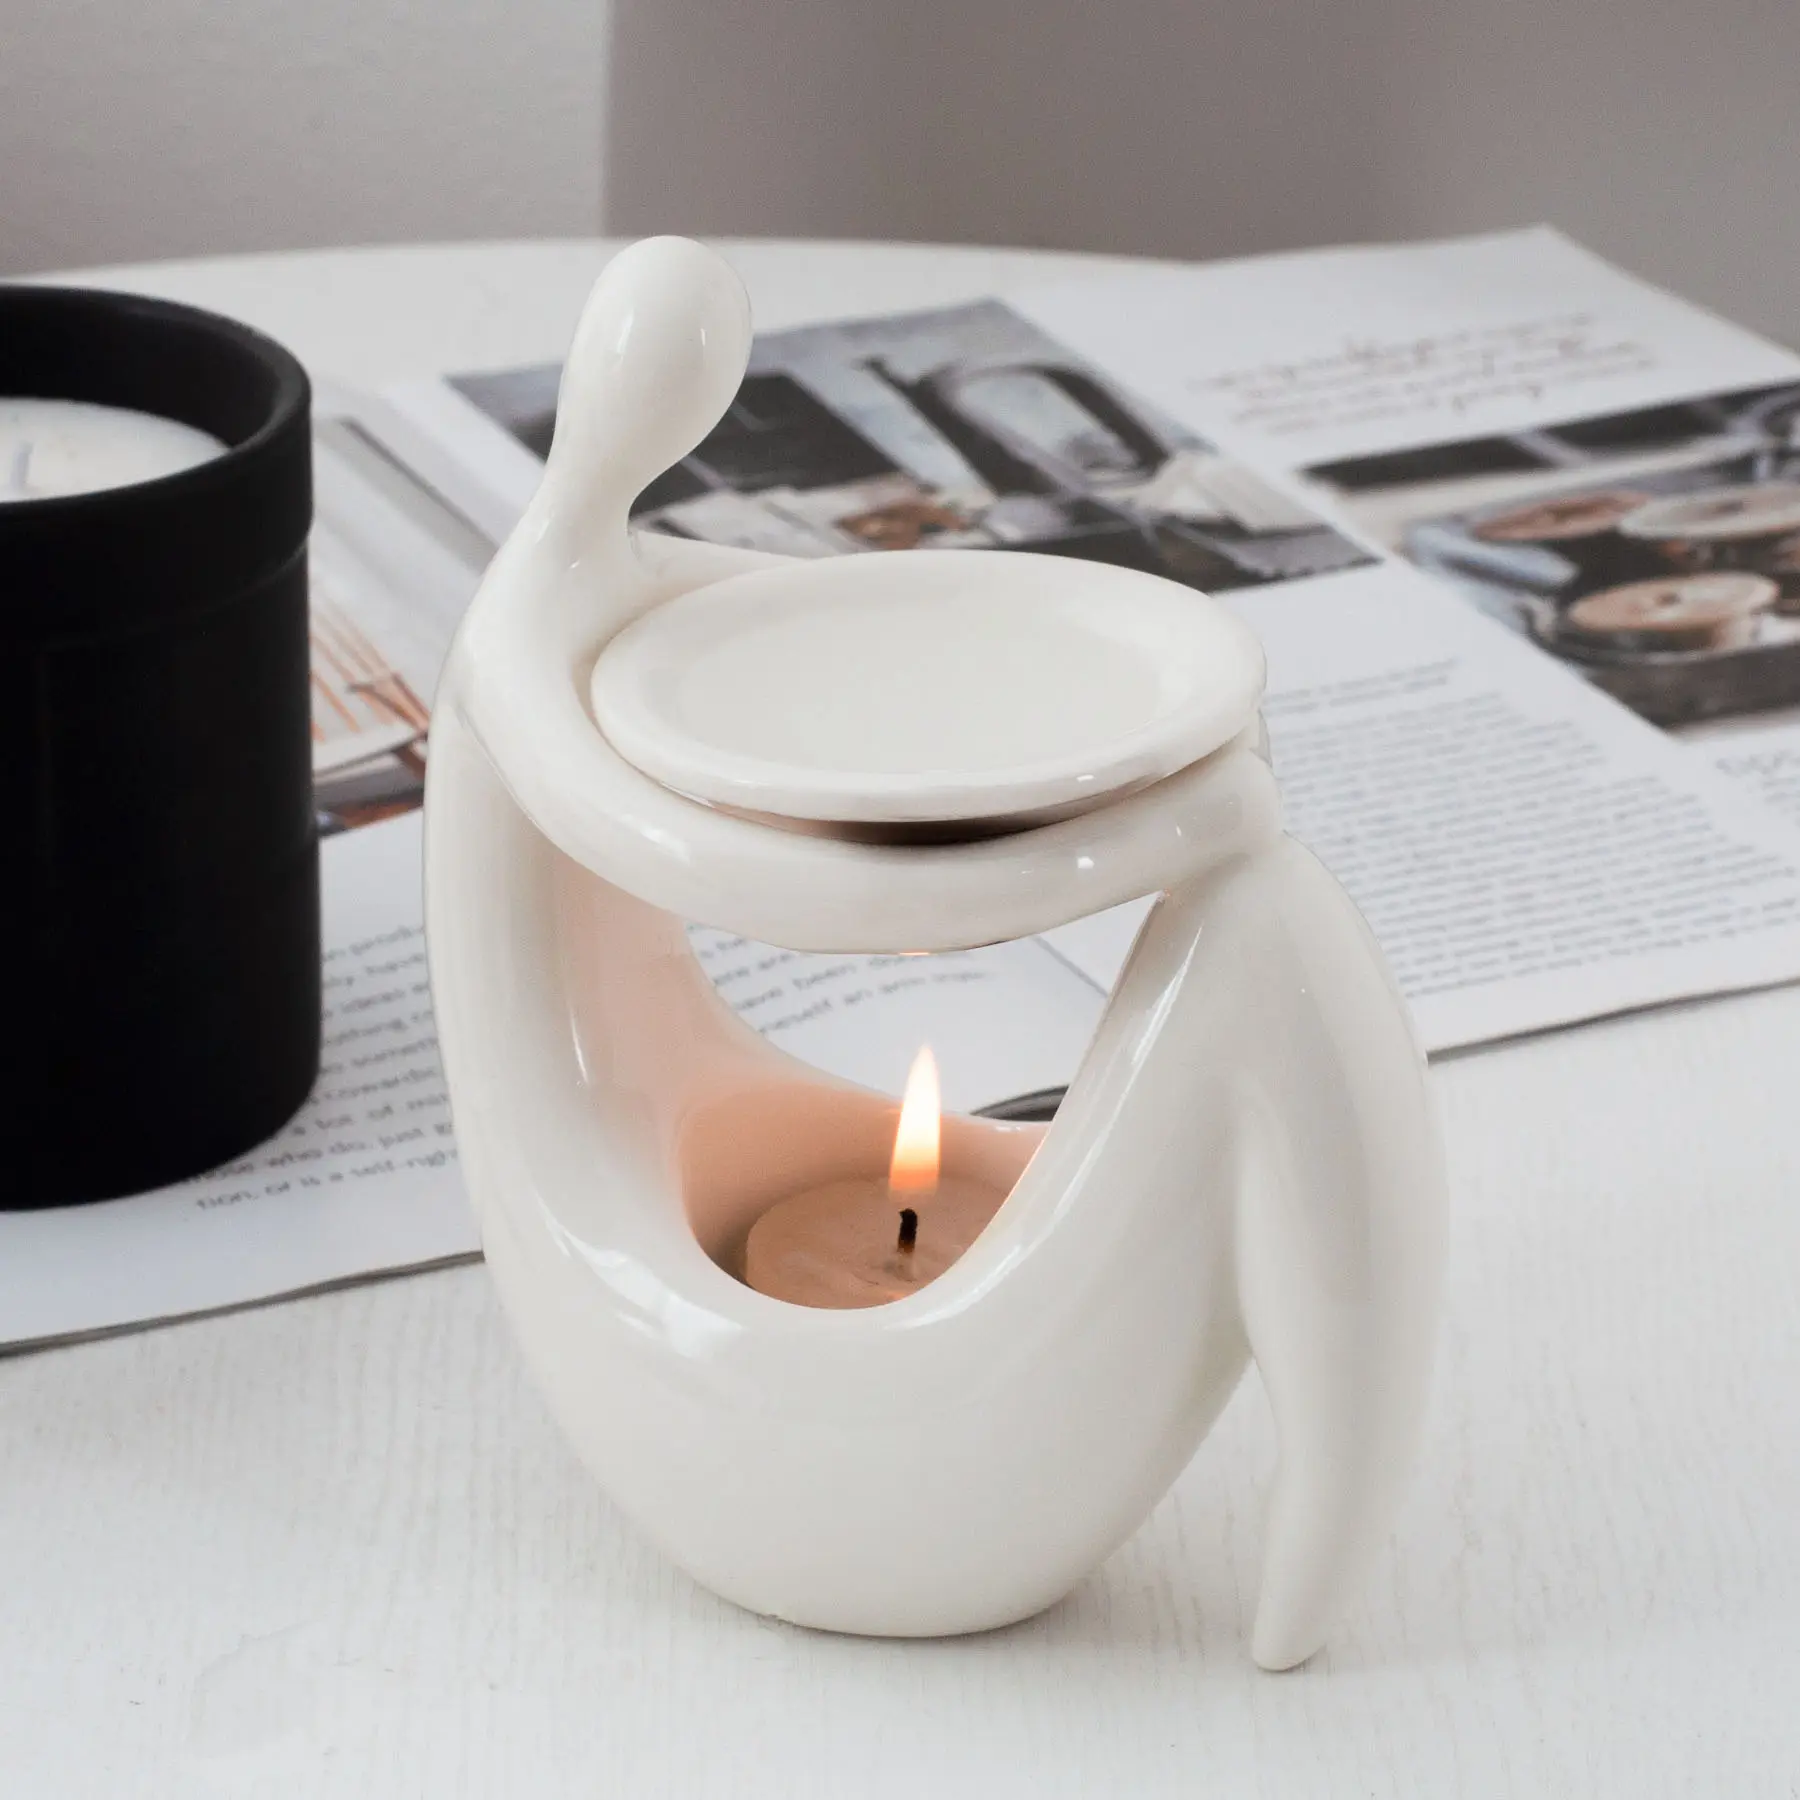 OEM kustom lilin porselen Melt pembakar esensial wewangian keramik minyak pembakar lilin rumah untuk dekorasi